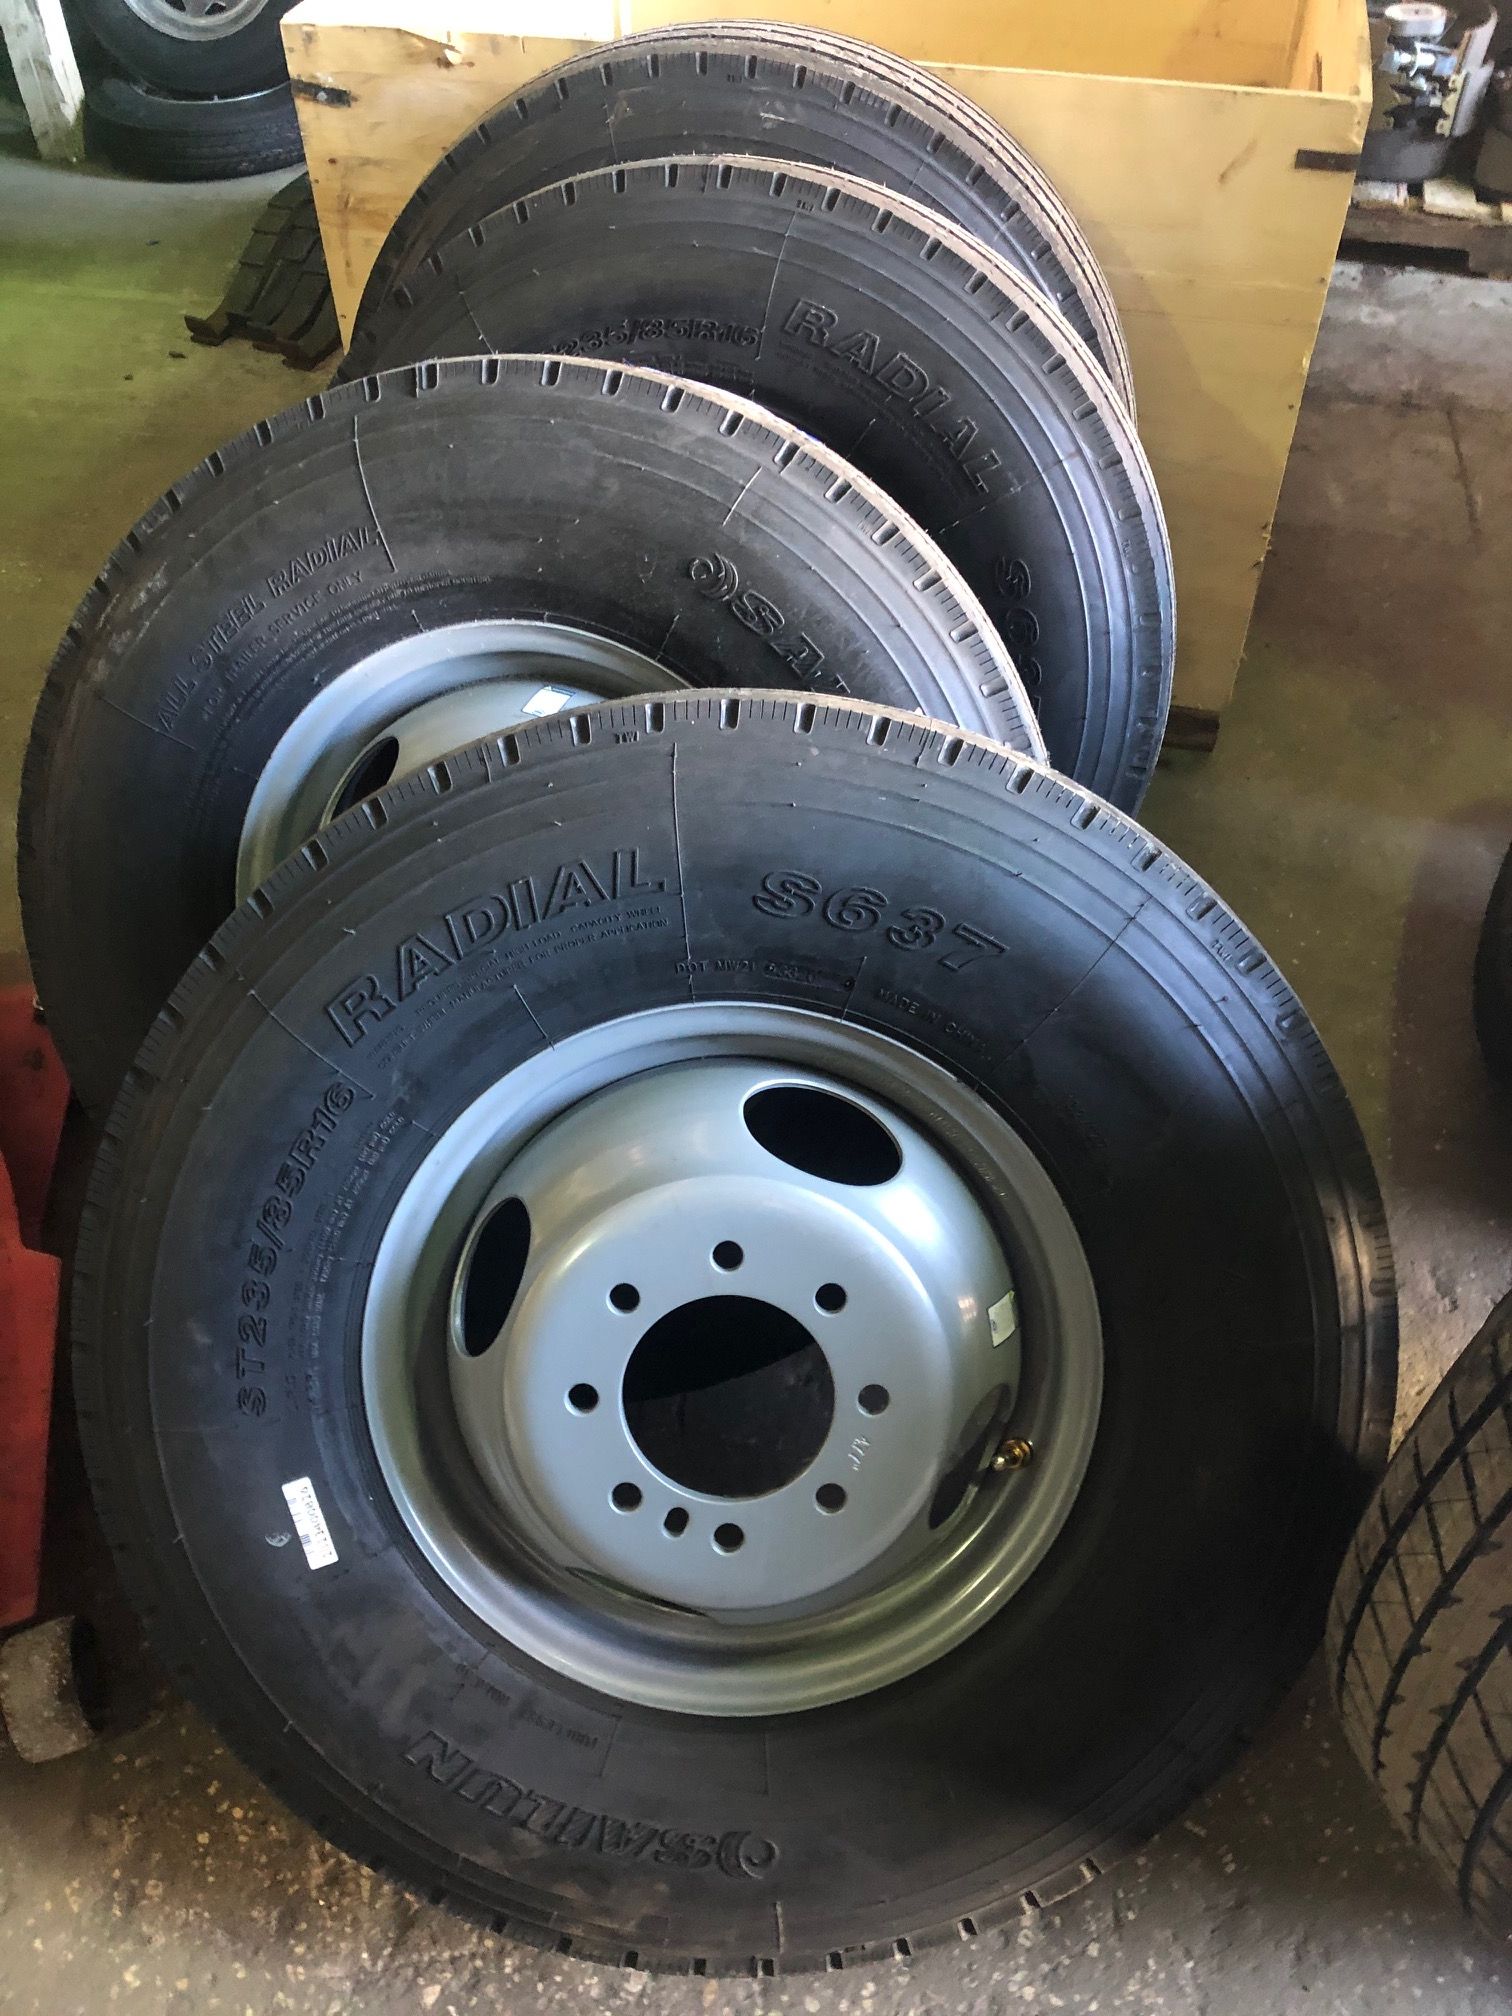 16" 8 Lug - Trailer tires on duel rim - 235/85/16 all steel - 14 ply - Trailer tires - We carry all trailer tires, trailer parts, trailer shop